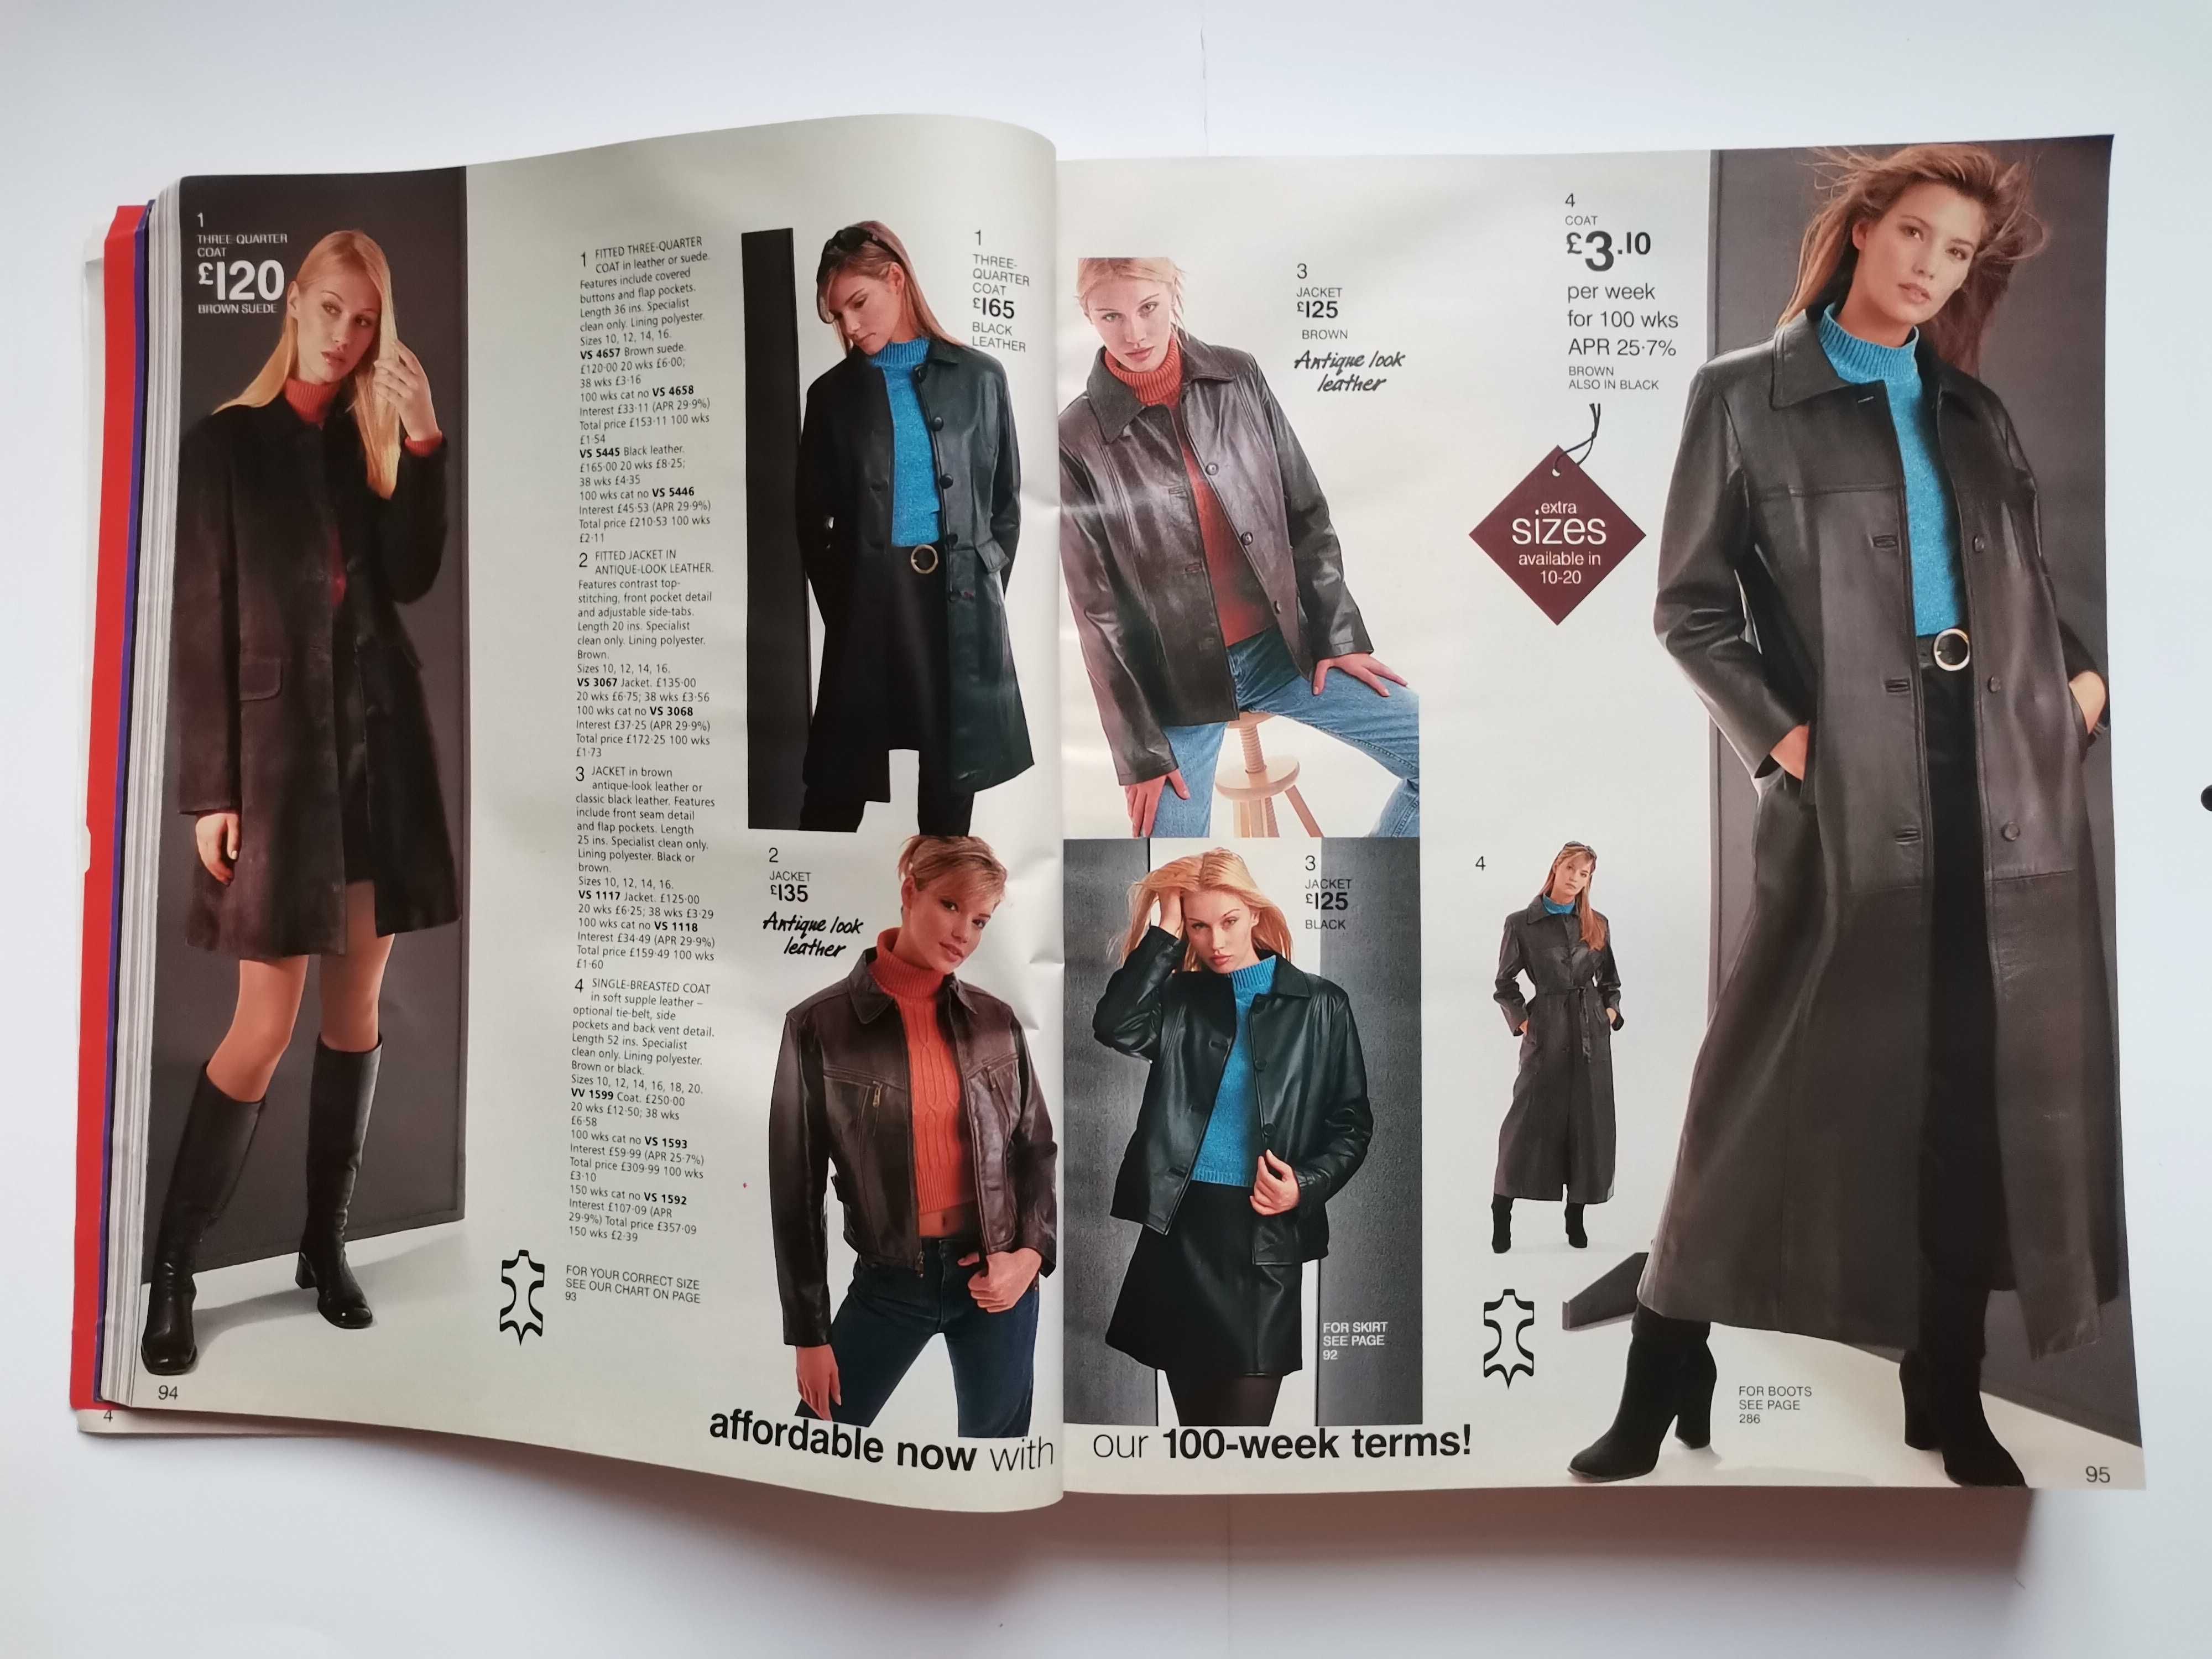 Katalog-Peter Craig jesień /zima 1997 /8